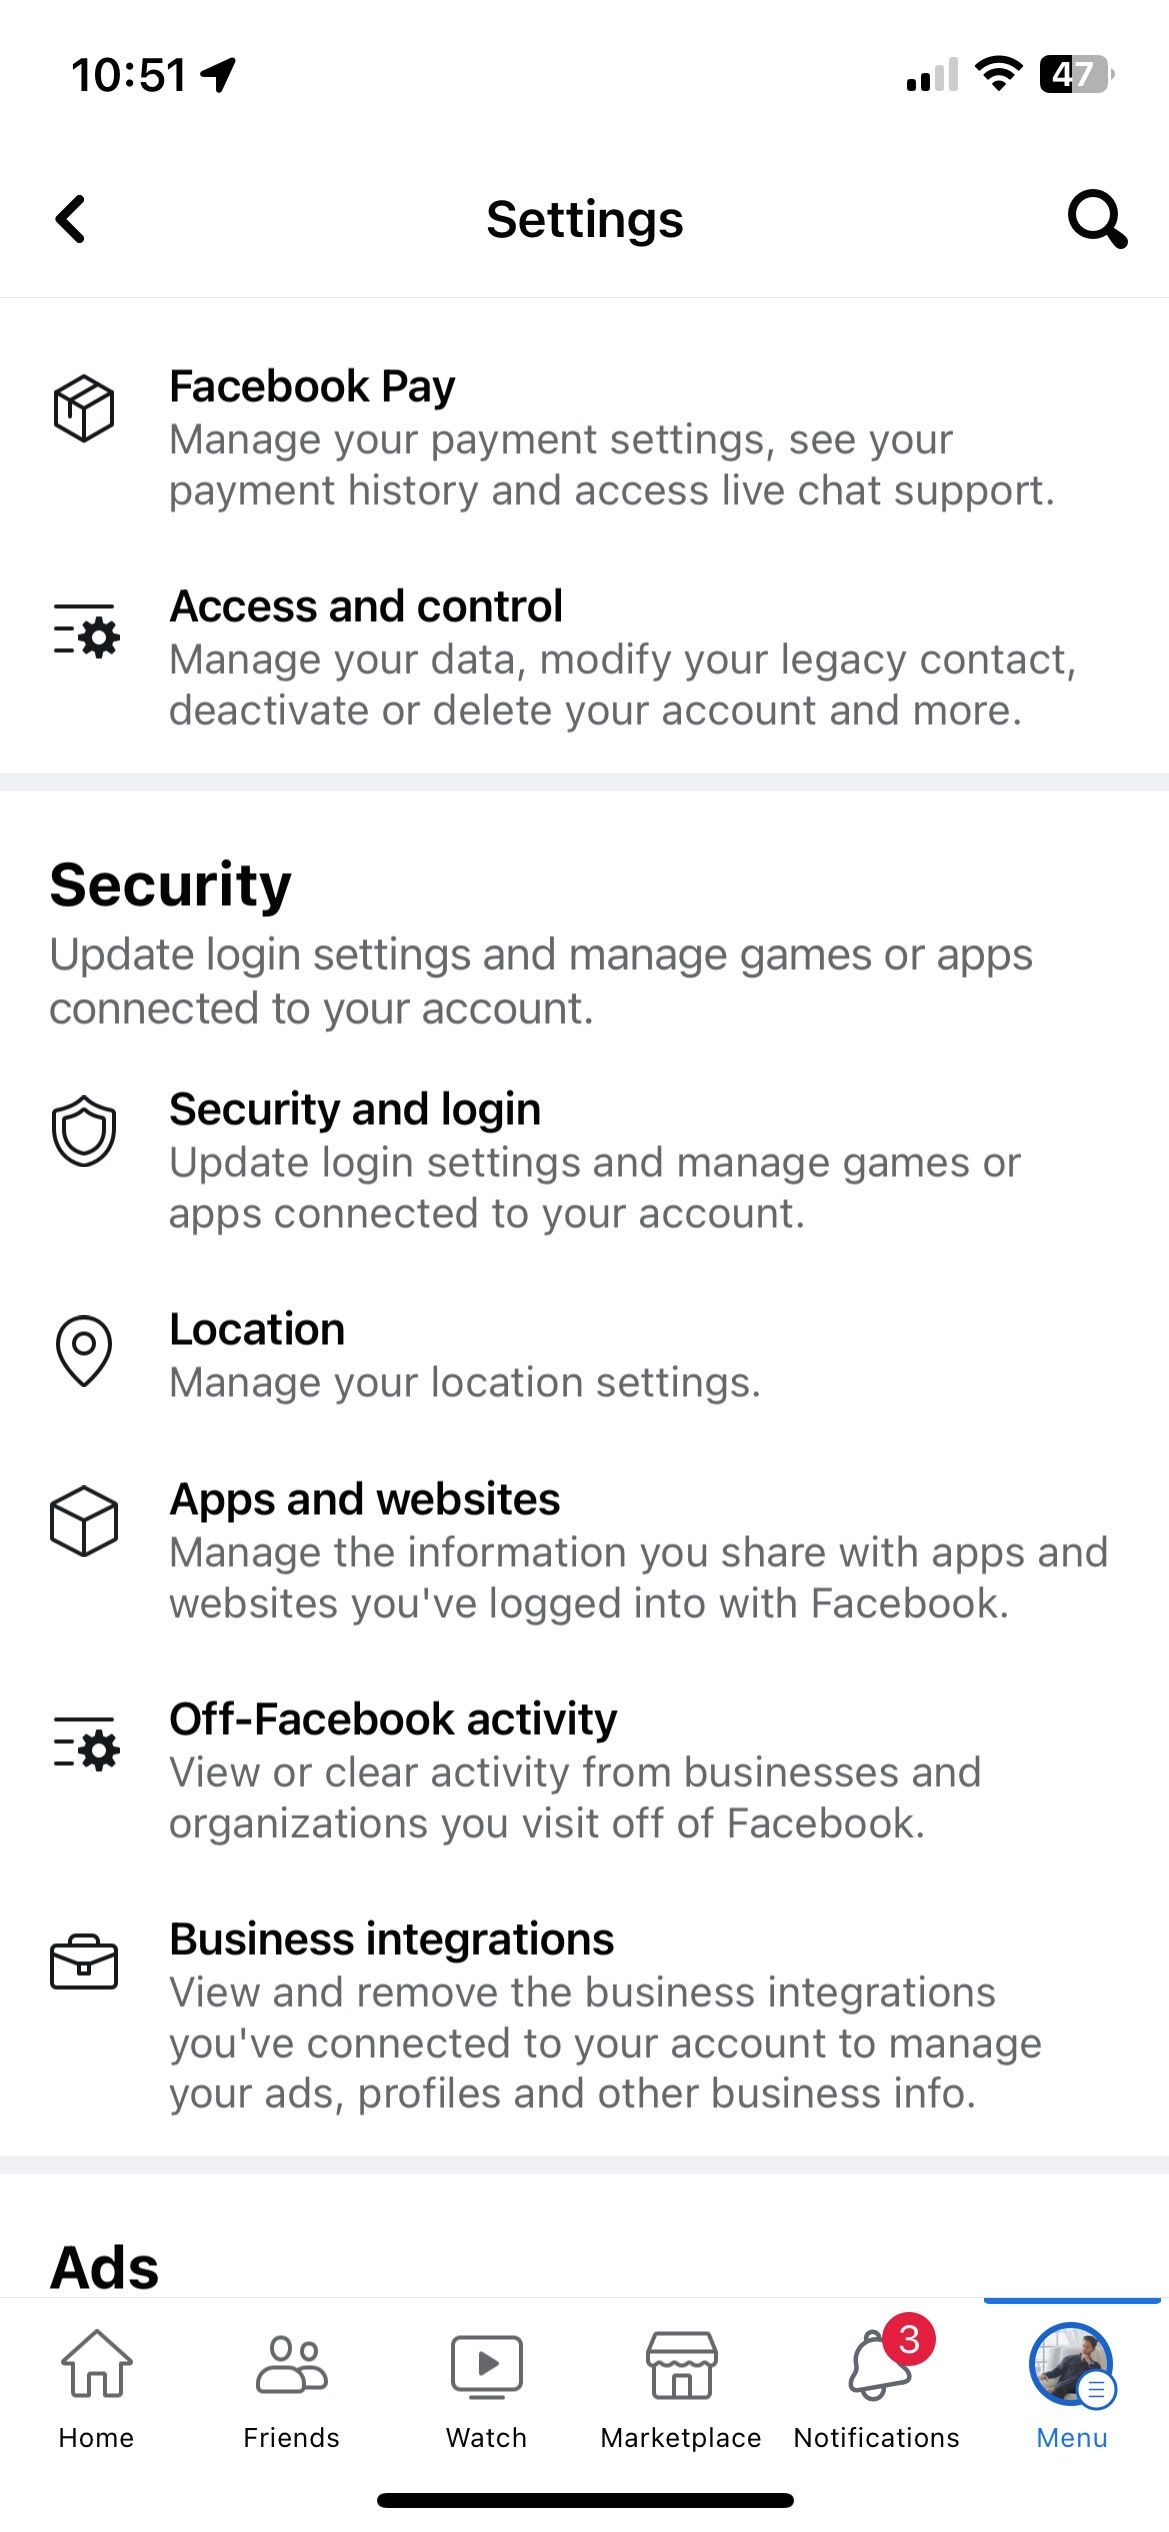 Facebook Security and login